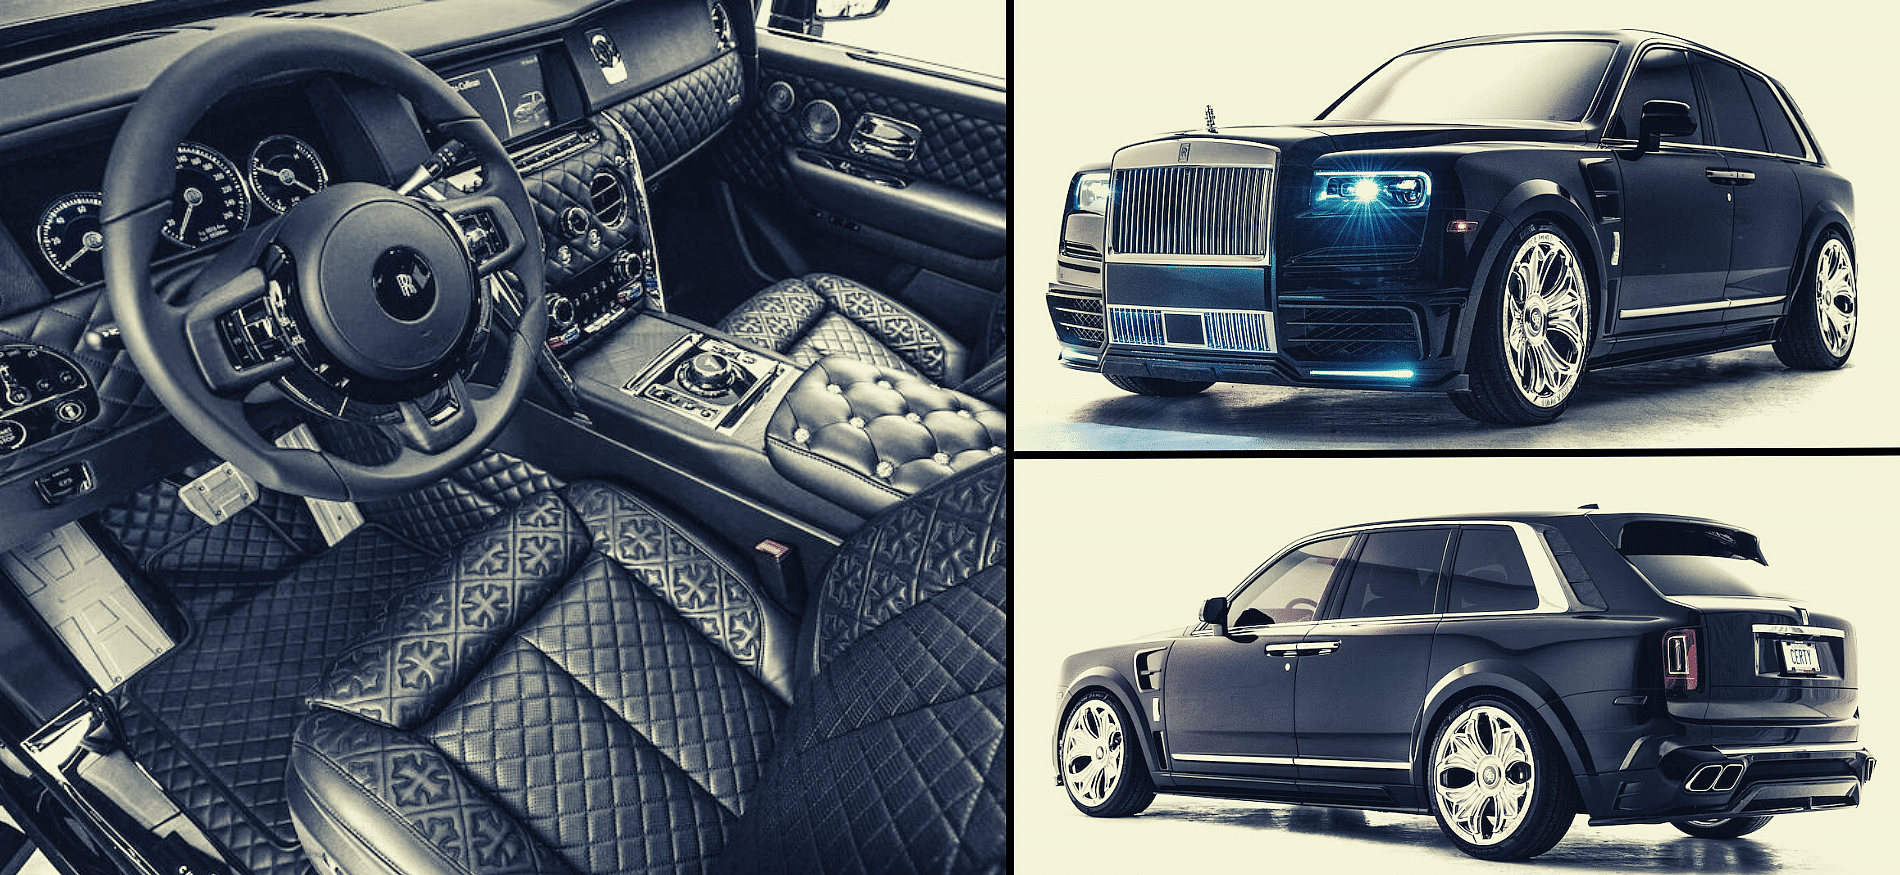 Drake's Rolls-Royce Cullinan